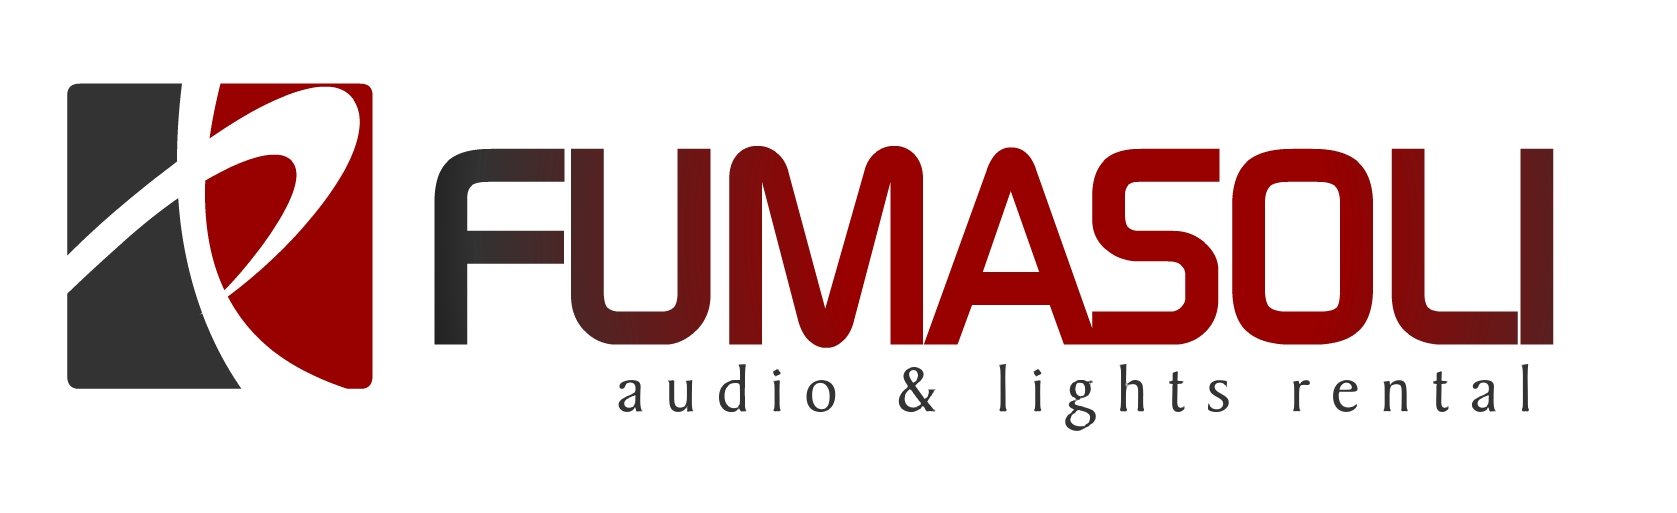 news fumasoli audio & lights rental